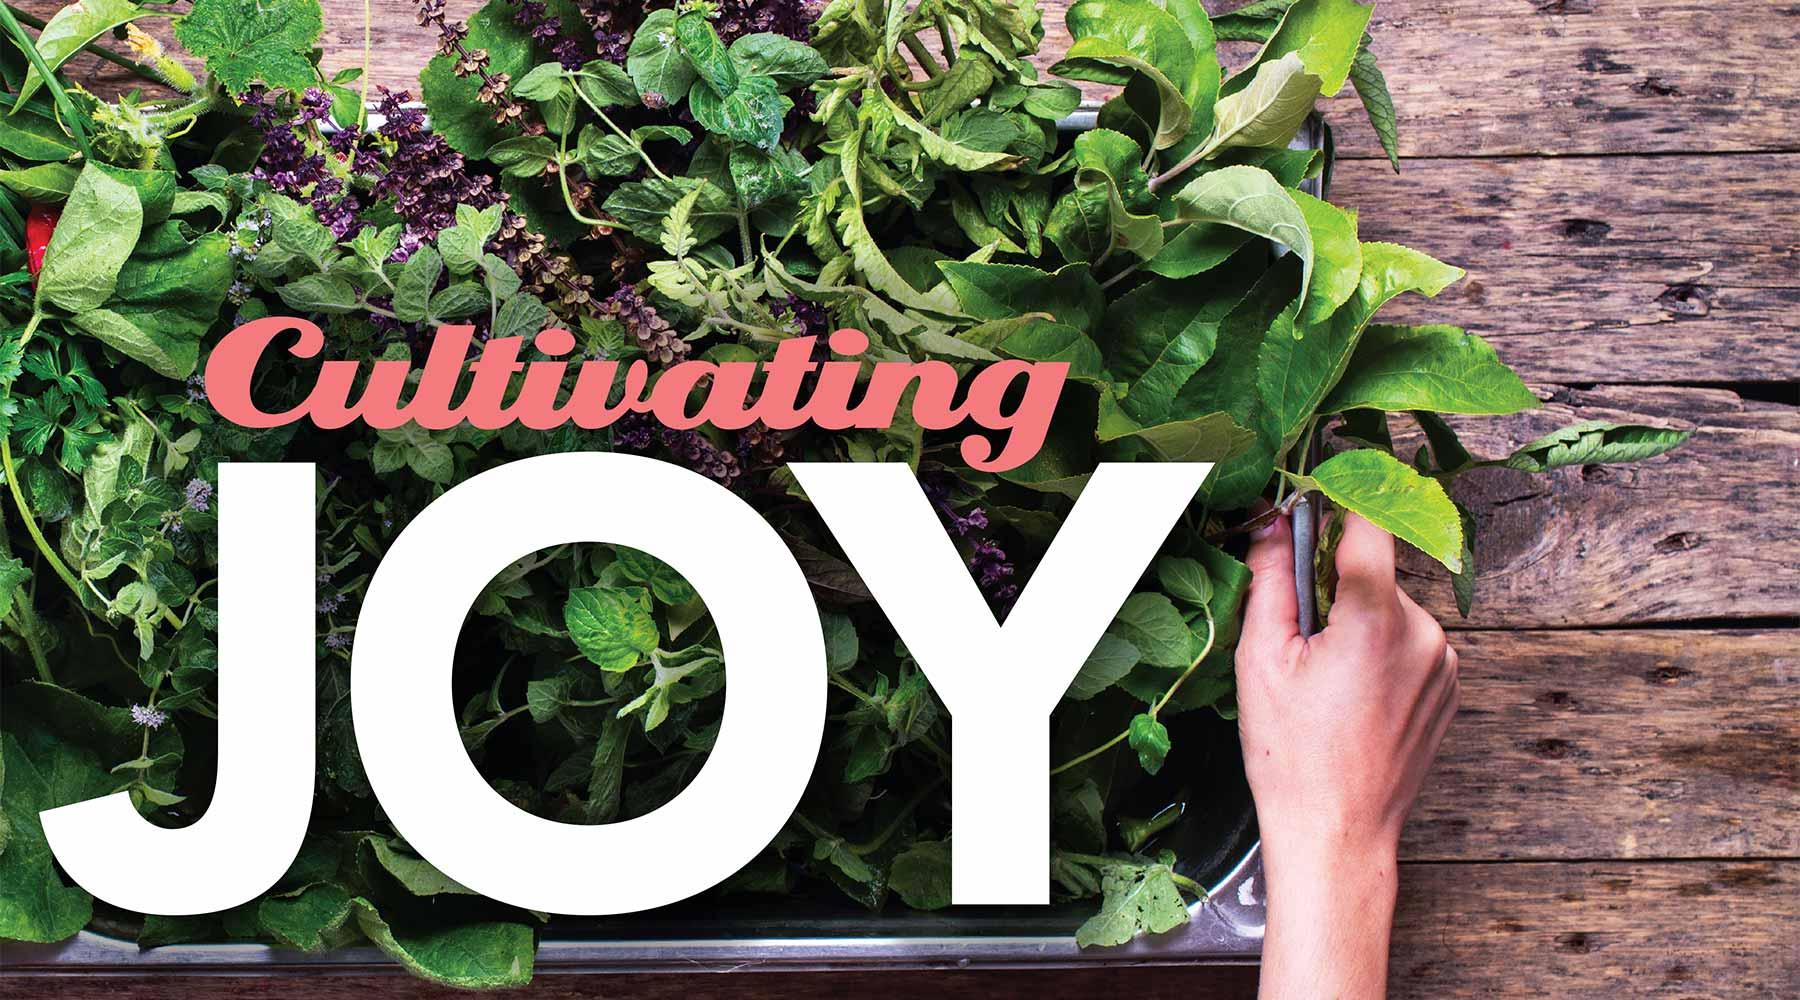 Cultivating joy - Winnipeg Free Press Homes